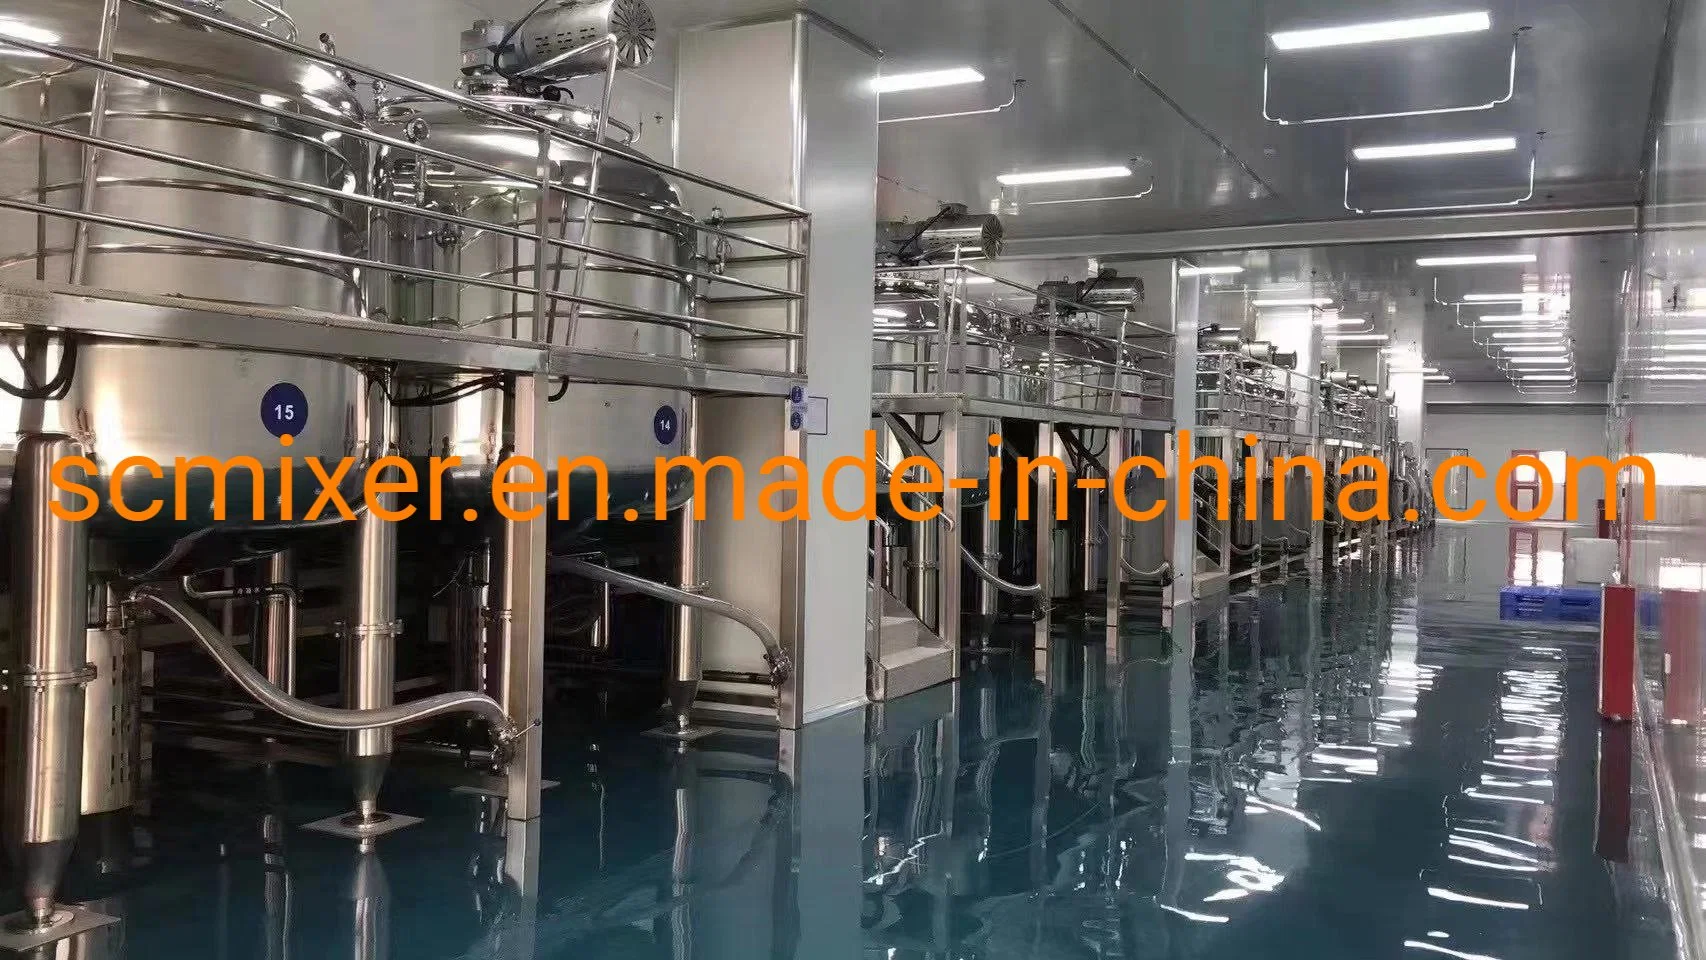 100L Cream Steamed Heated Mixing Tank Body Lotion Vacuum Emulsifier Cosmetic Homogenizing Machine Mixer